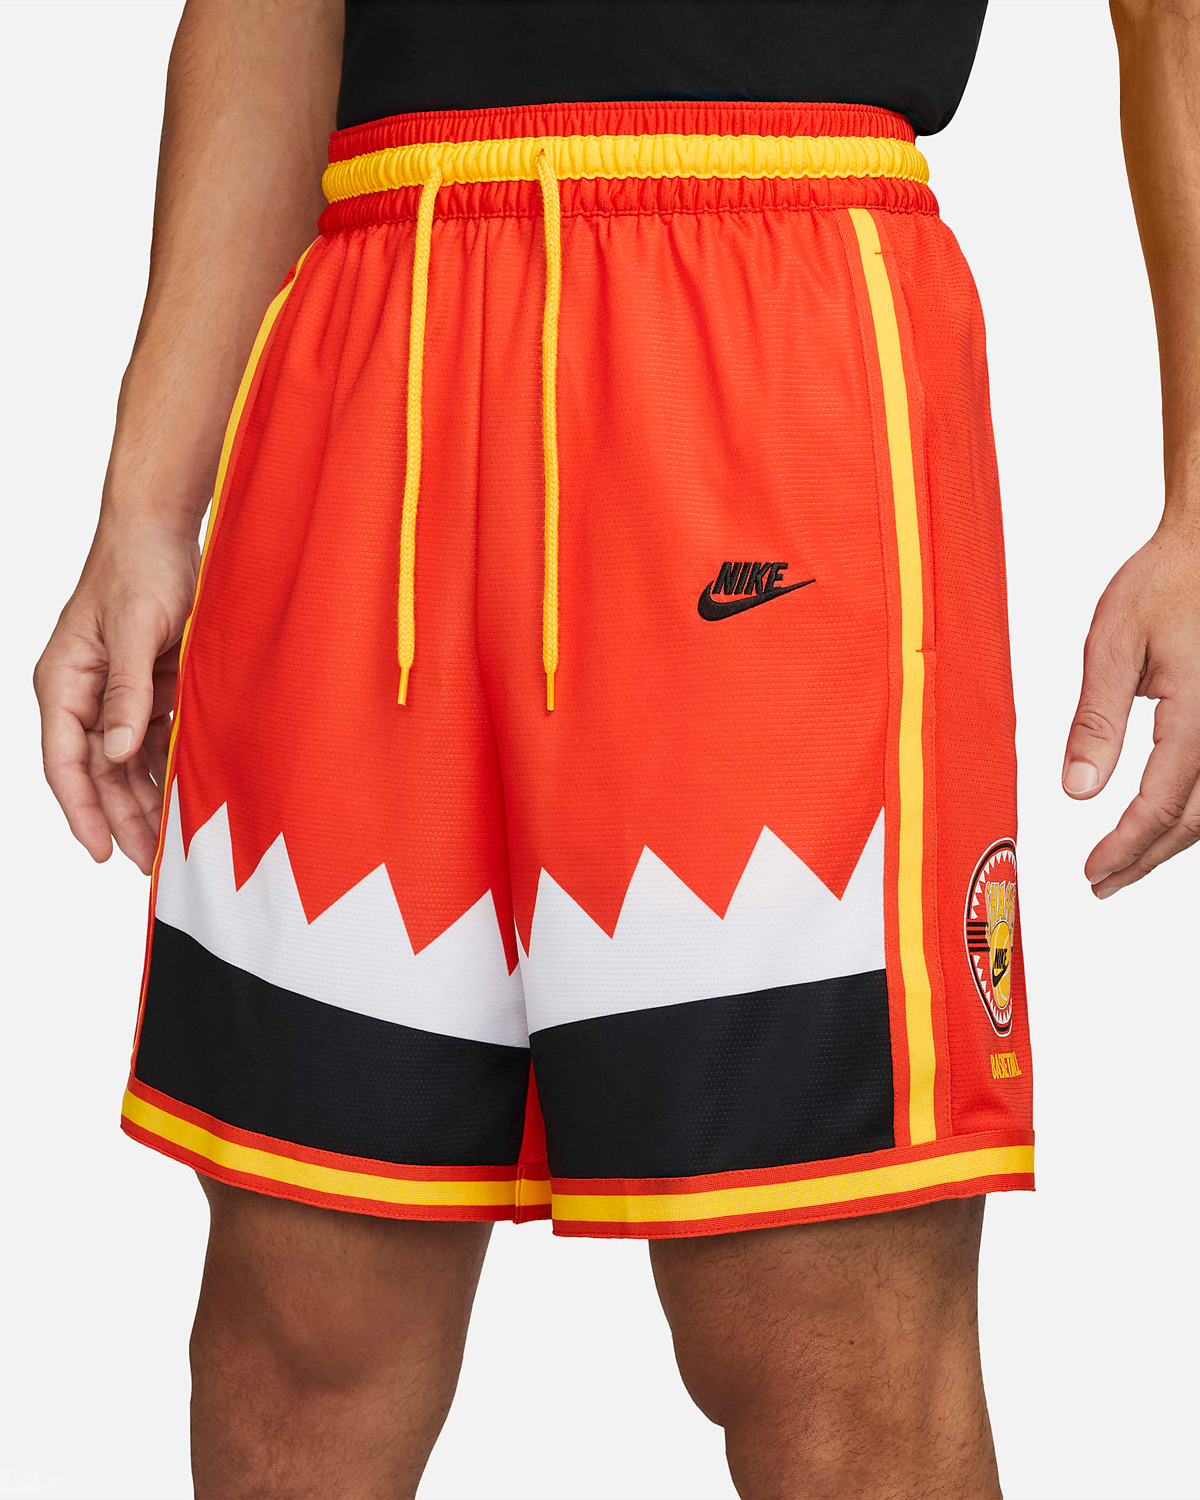 Nike-Standard-Issue-Sharks-Basketball-Shorts-Habanero-Red-1